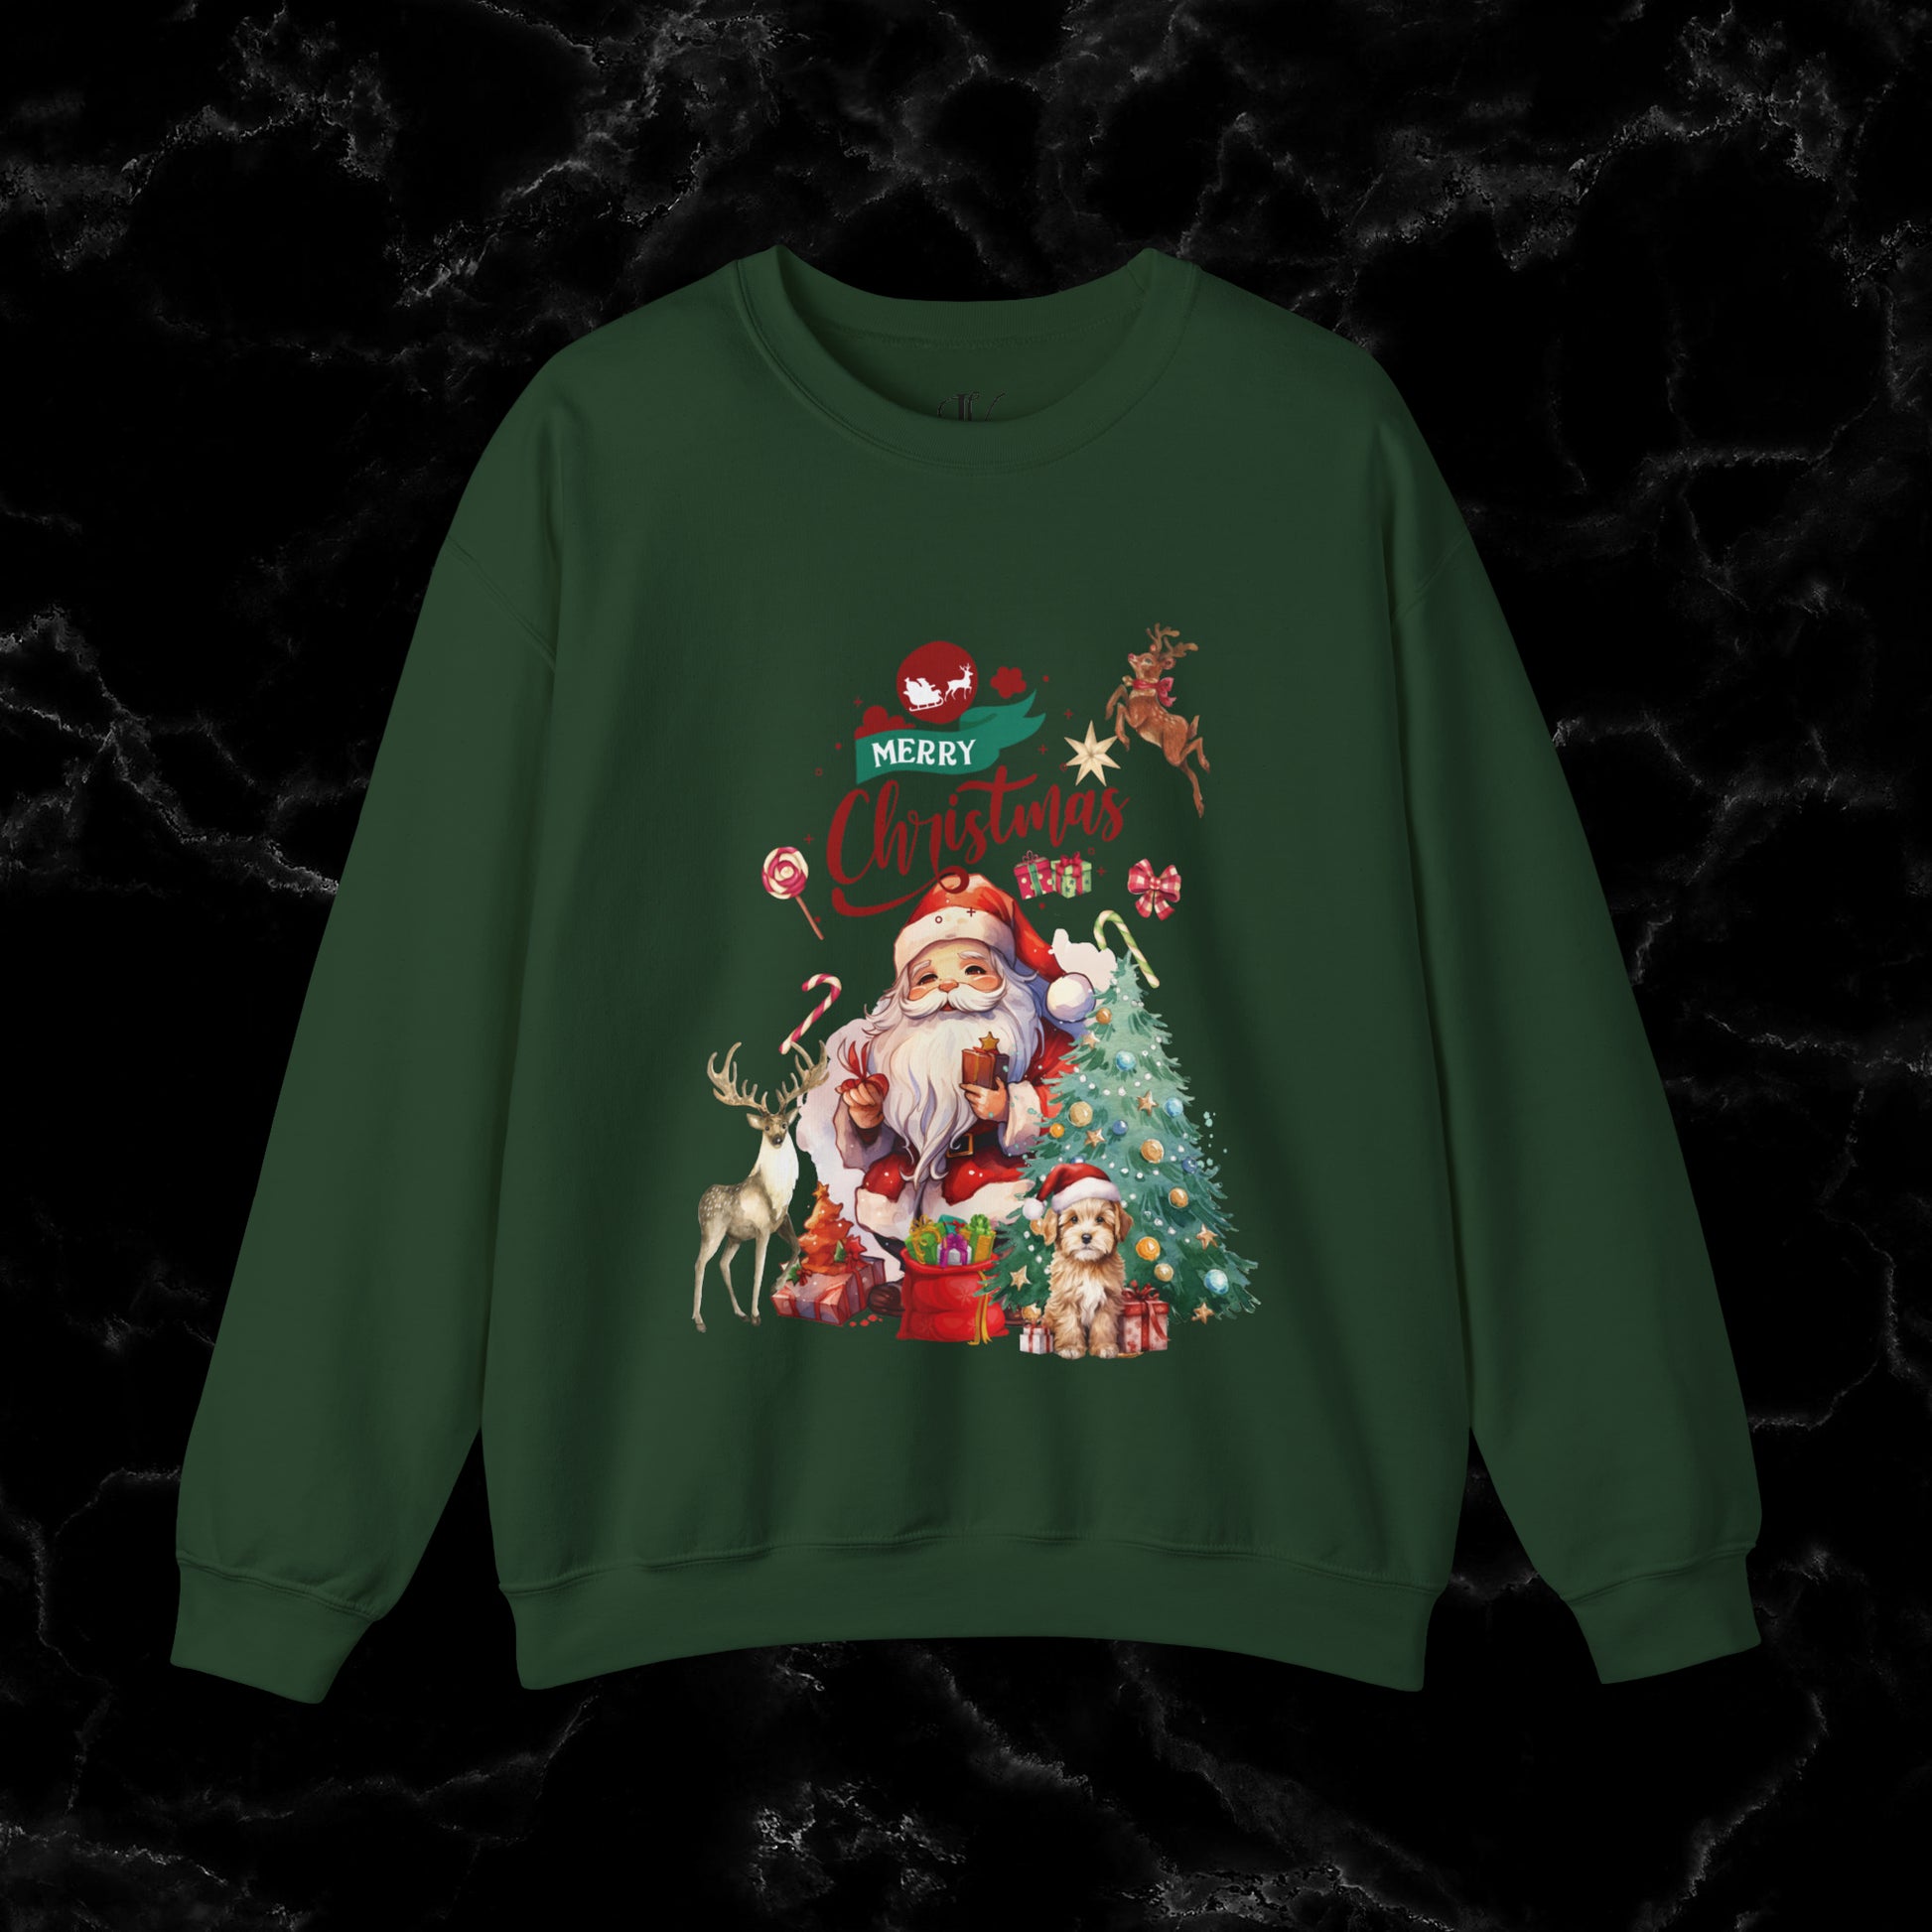 Merry Christmas Sweatshirt | Christmas Shirt - Matching Christmas Shirt - Santa Claus Merry Christmas Sweatshirt - Holiday Gift - Christmas Gift Sweatshirt S Forest Green 